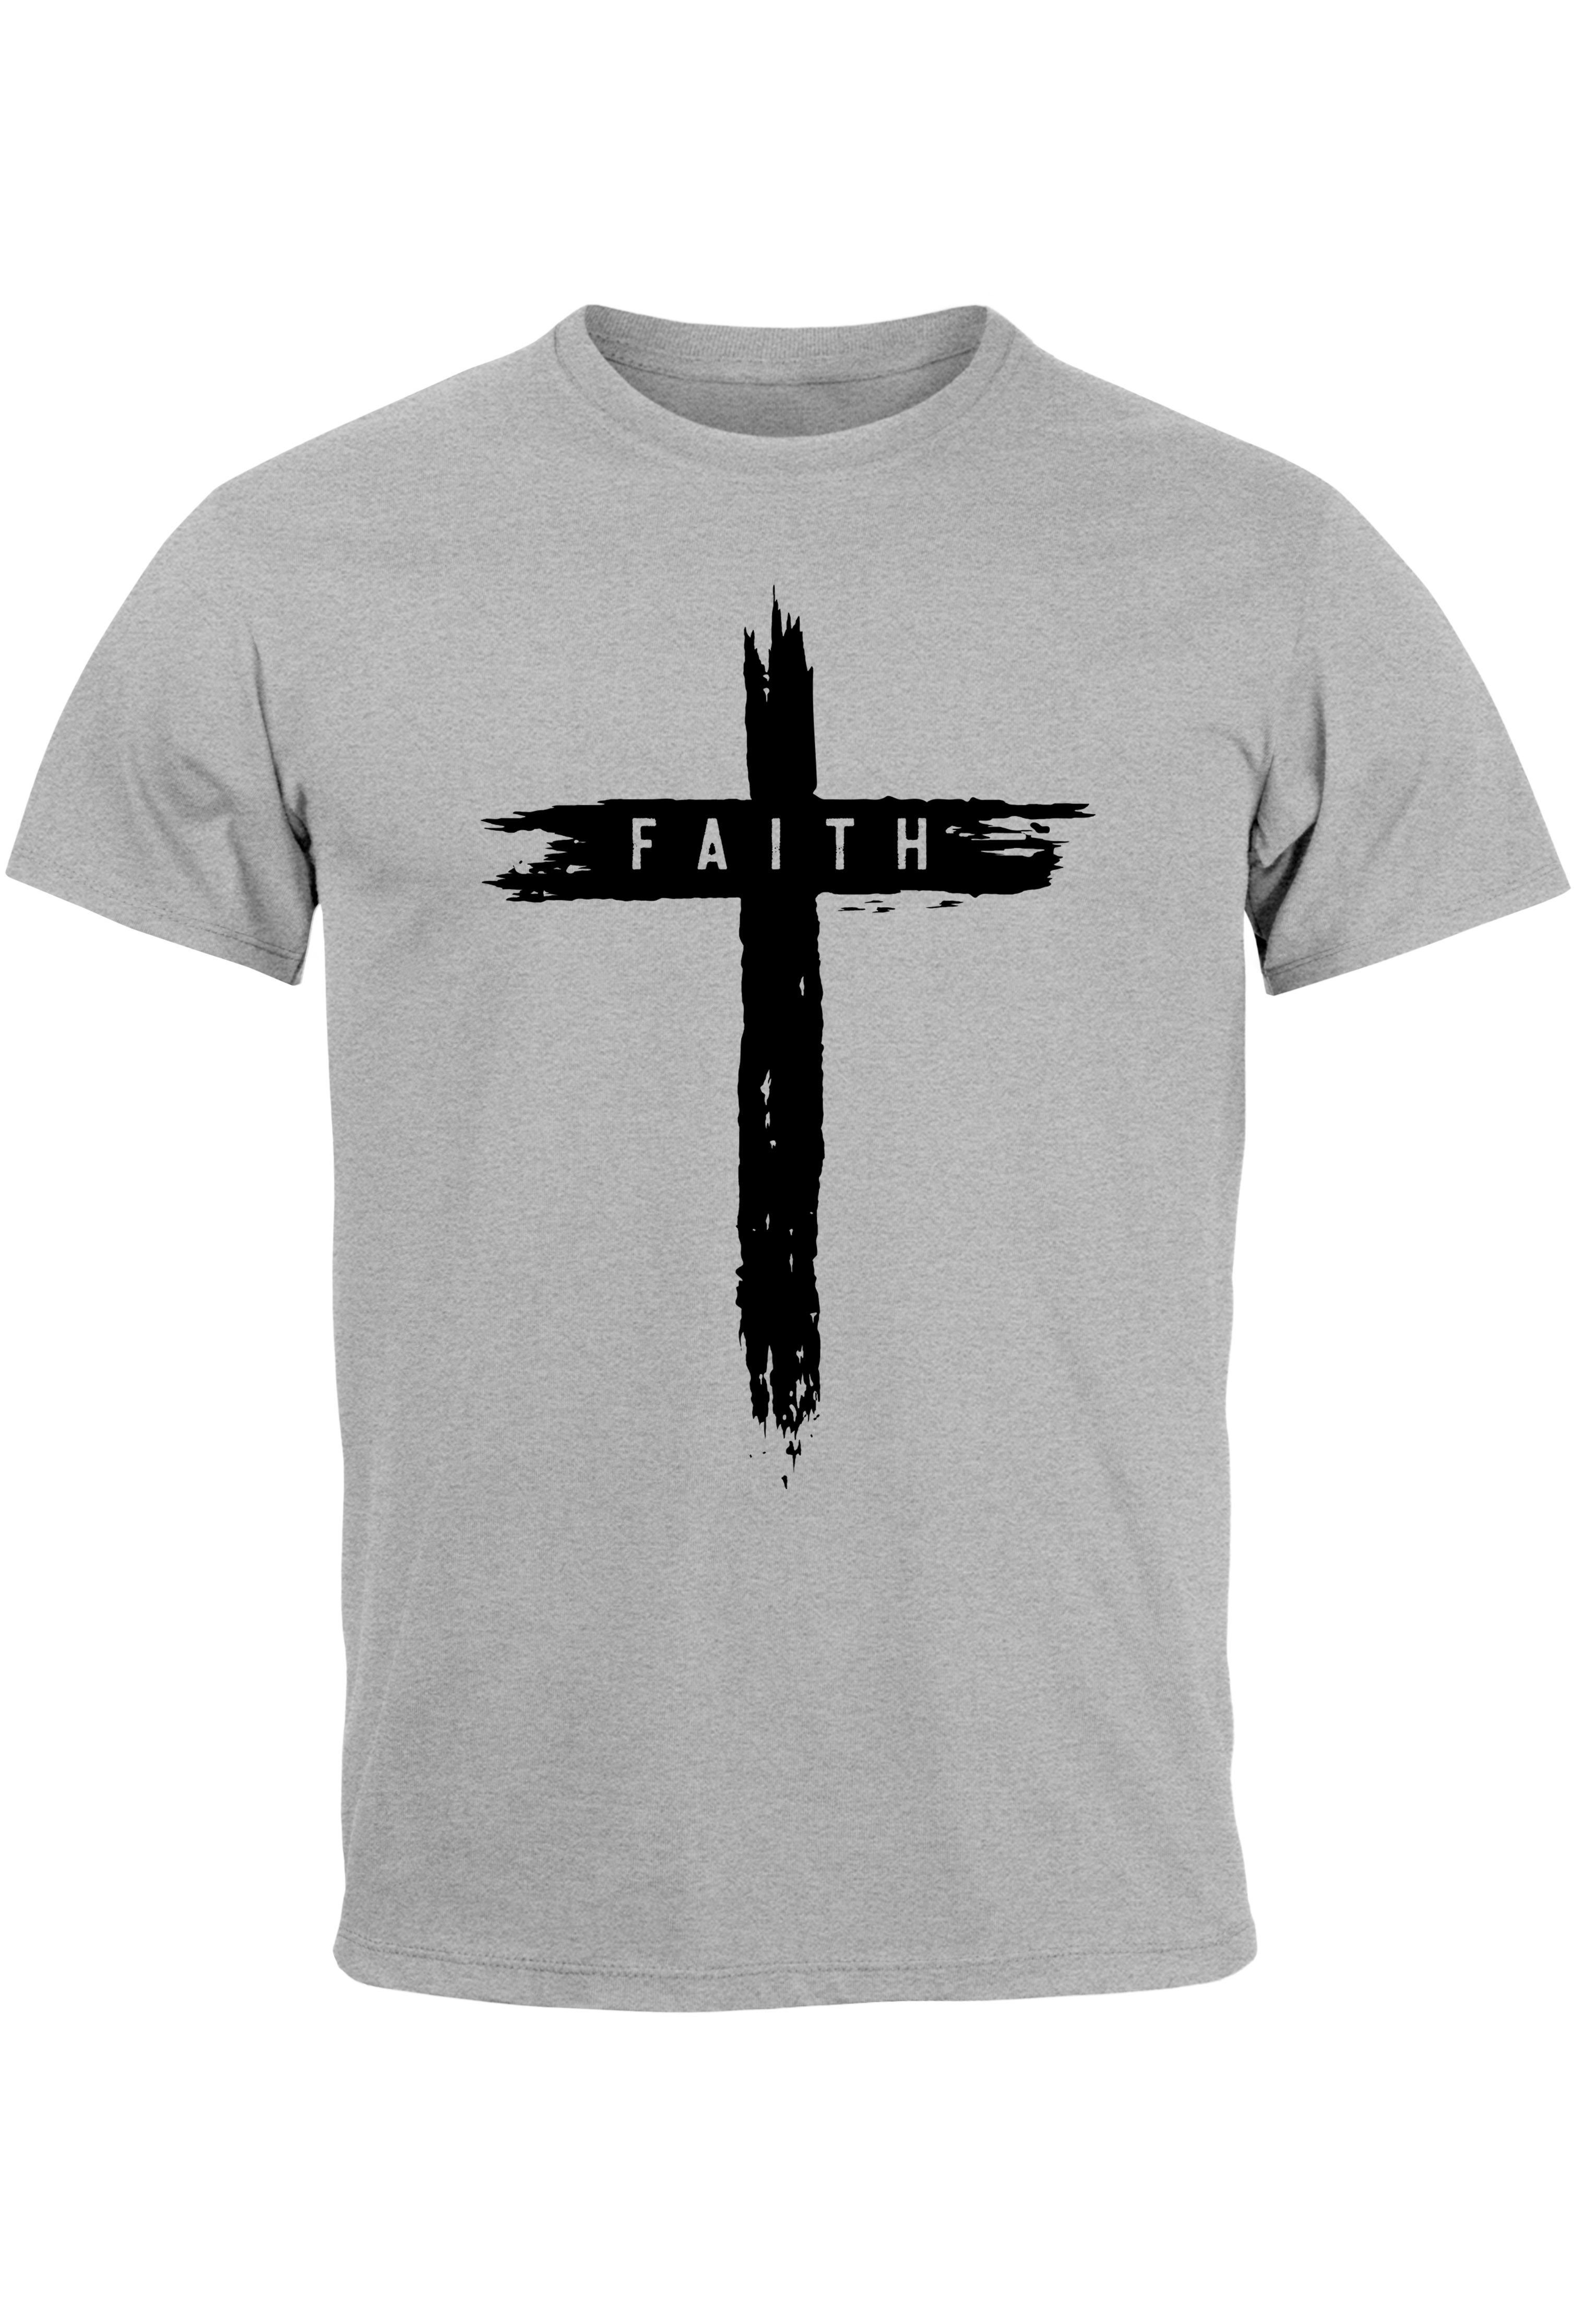 Neverless Print-Shirt Herren T-Shirt Printshirt Aufdruck Kreuz Cross Faith Glaube Trend-Moti mit Print grau